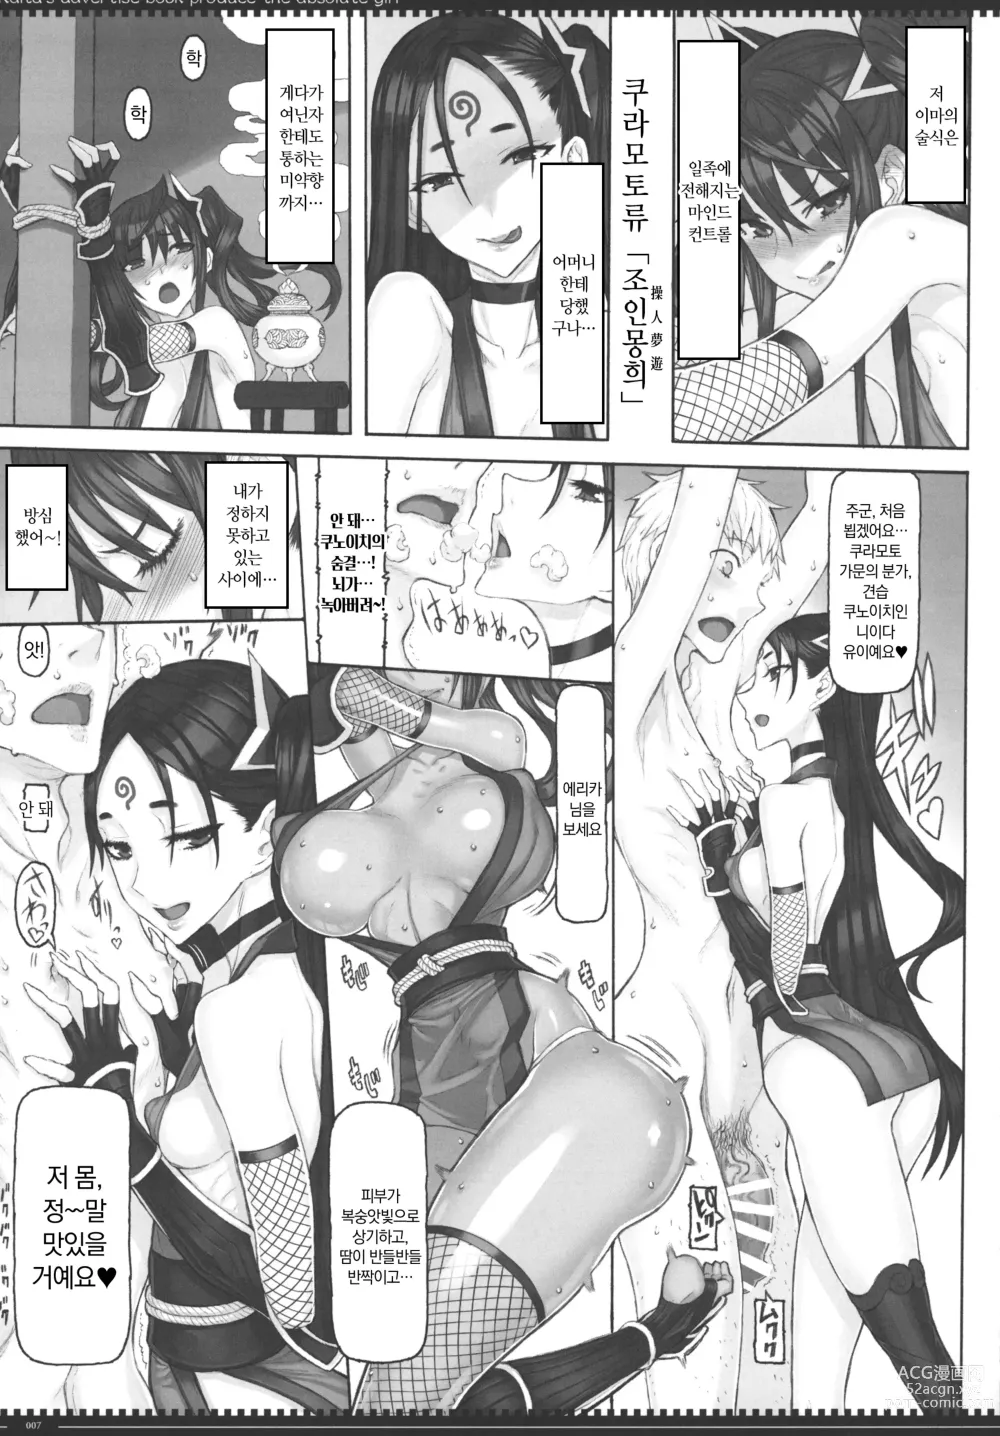 Page 6 of doujinshi 마법소녀 22.0 + C101 회장 한정본